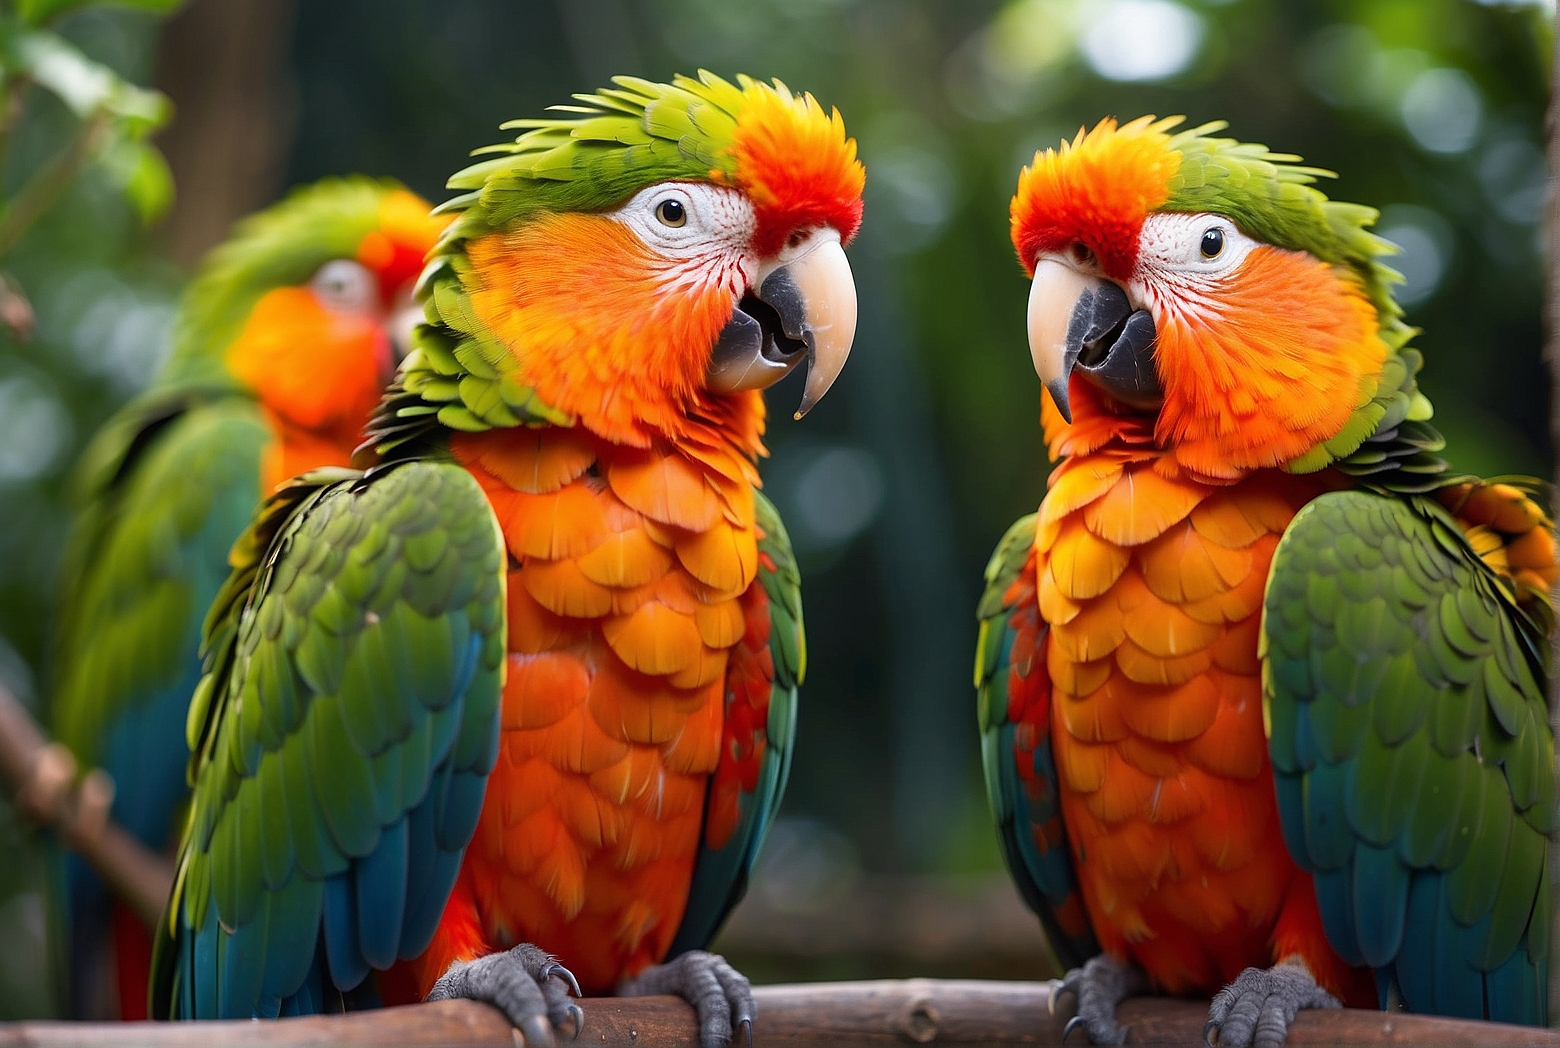 Why do parrots scream?